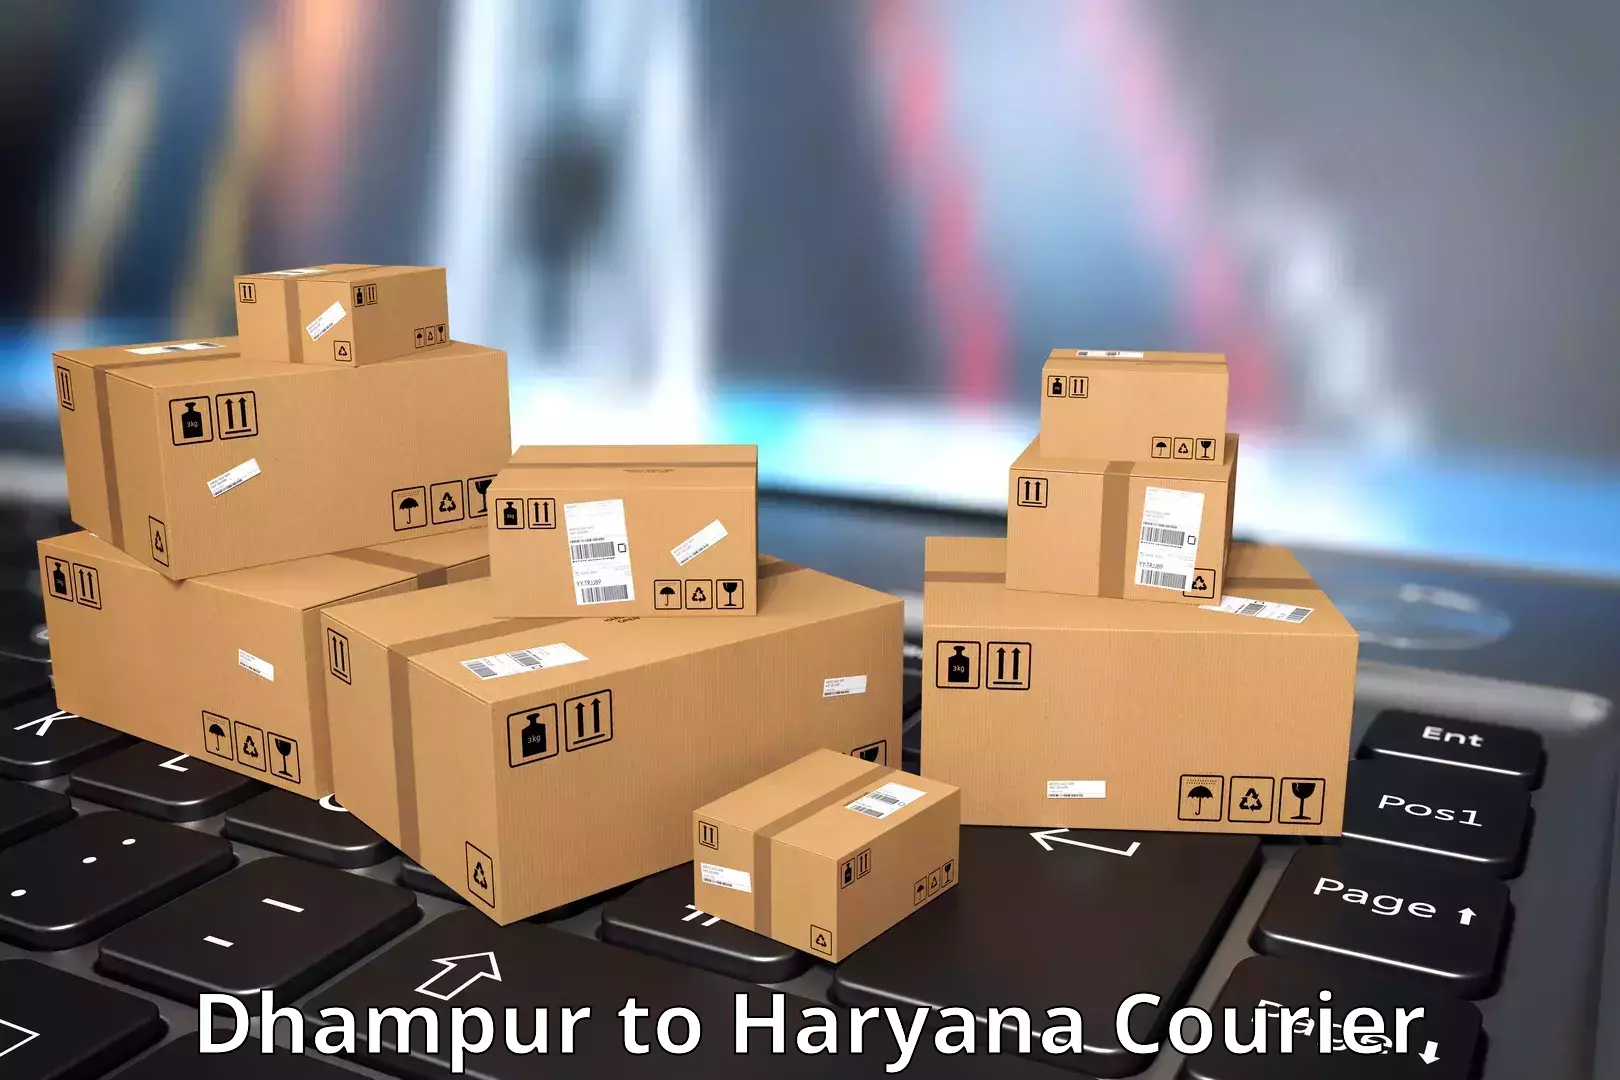 Courier service comparison Dhampur to Rewari